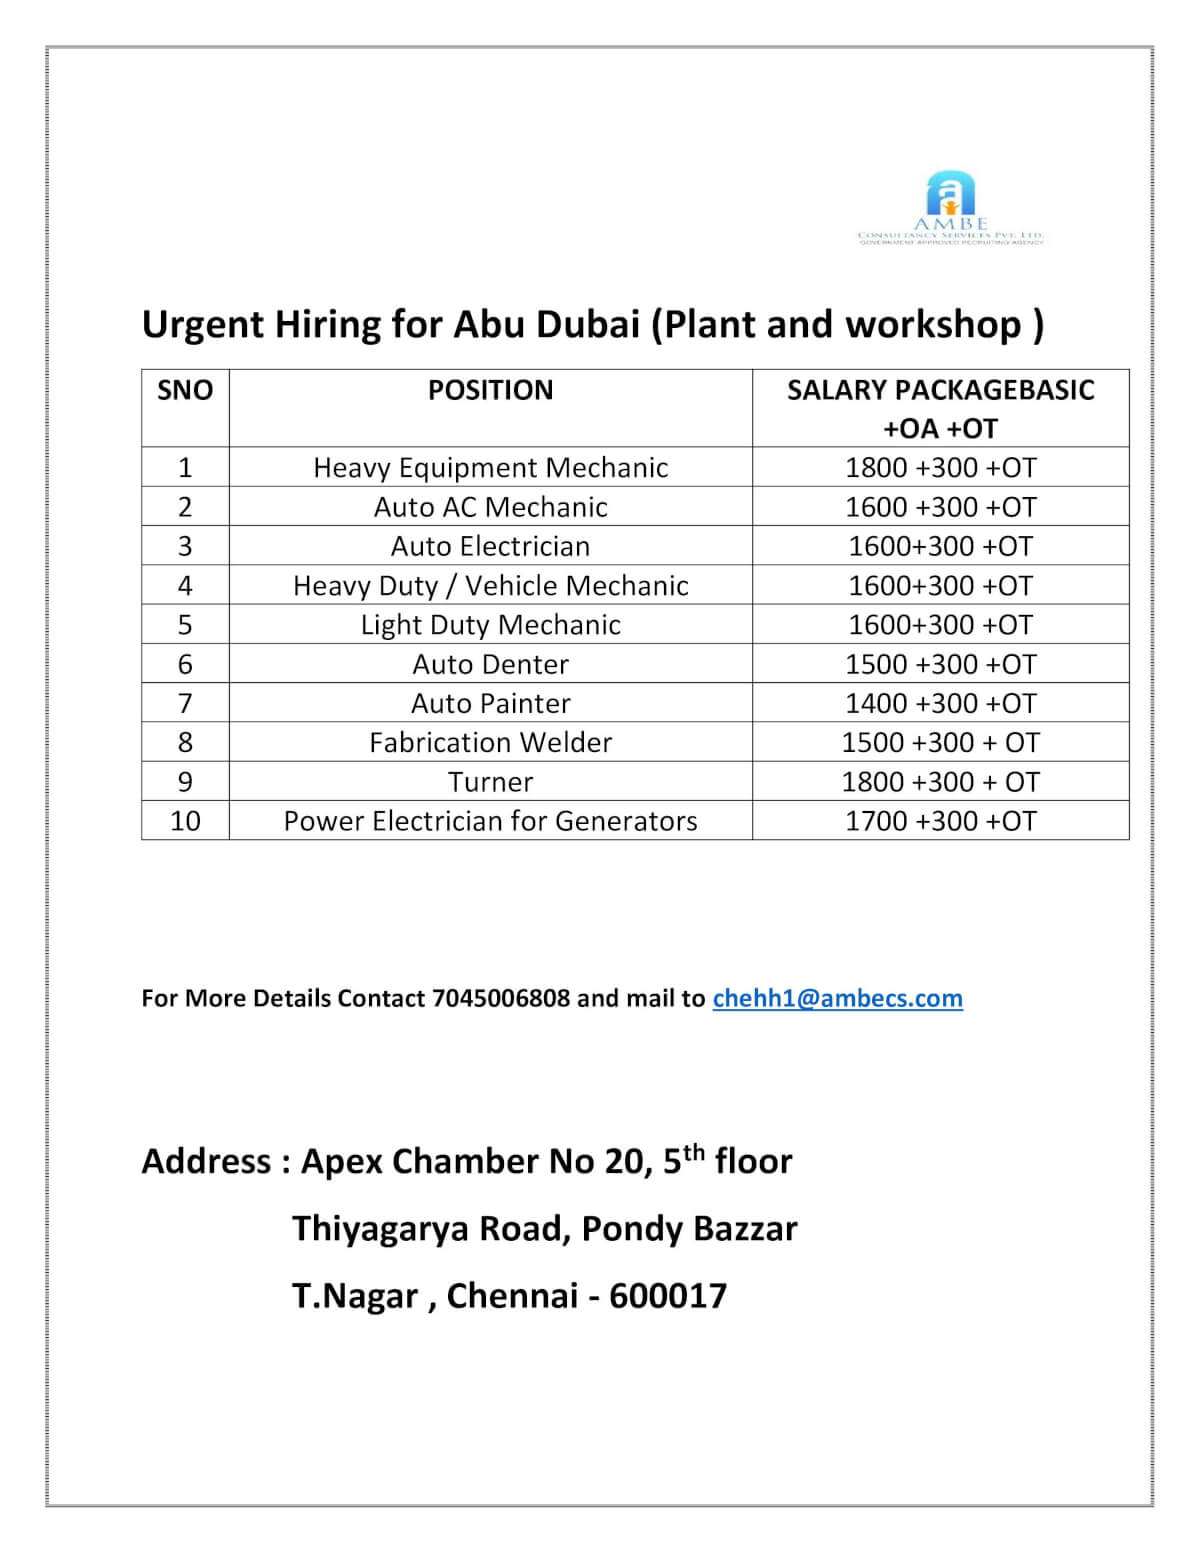 Urgent Hiring for Abu- Dhabi